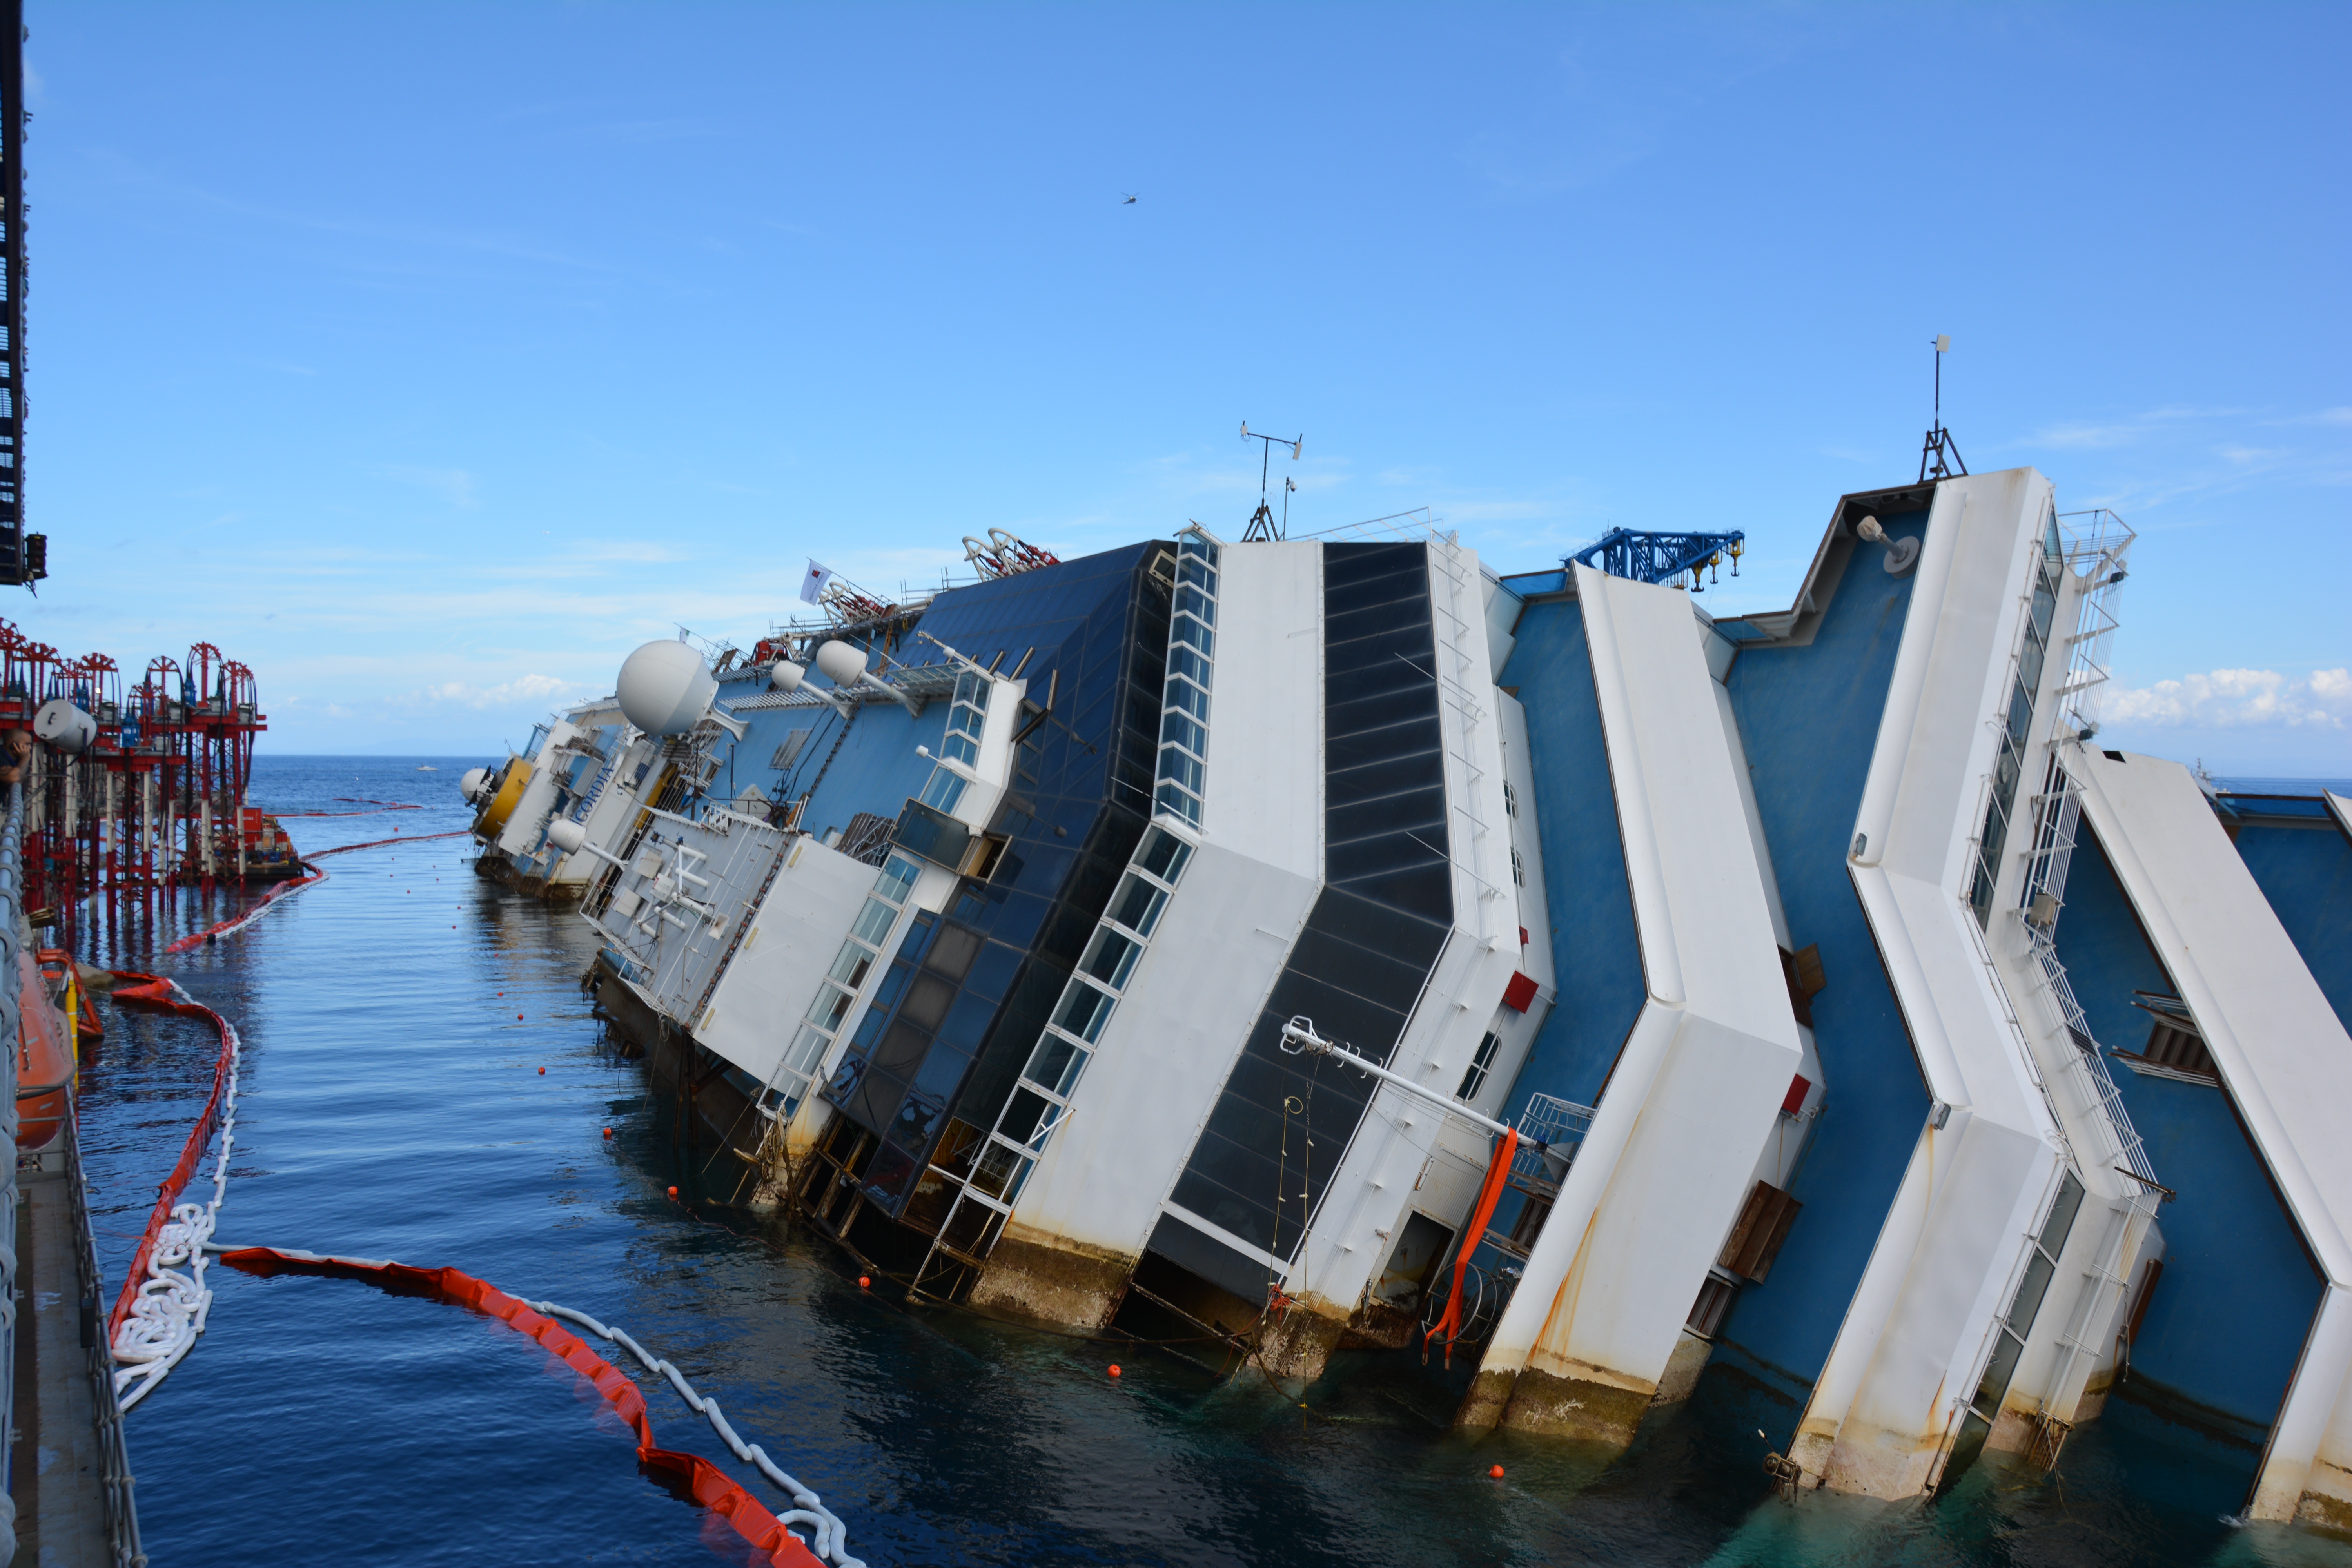 The Salvage of the Costa Concordia